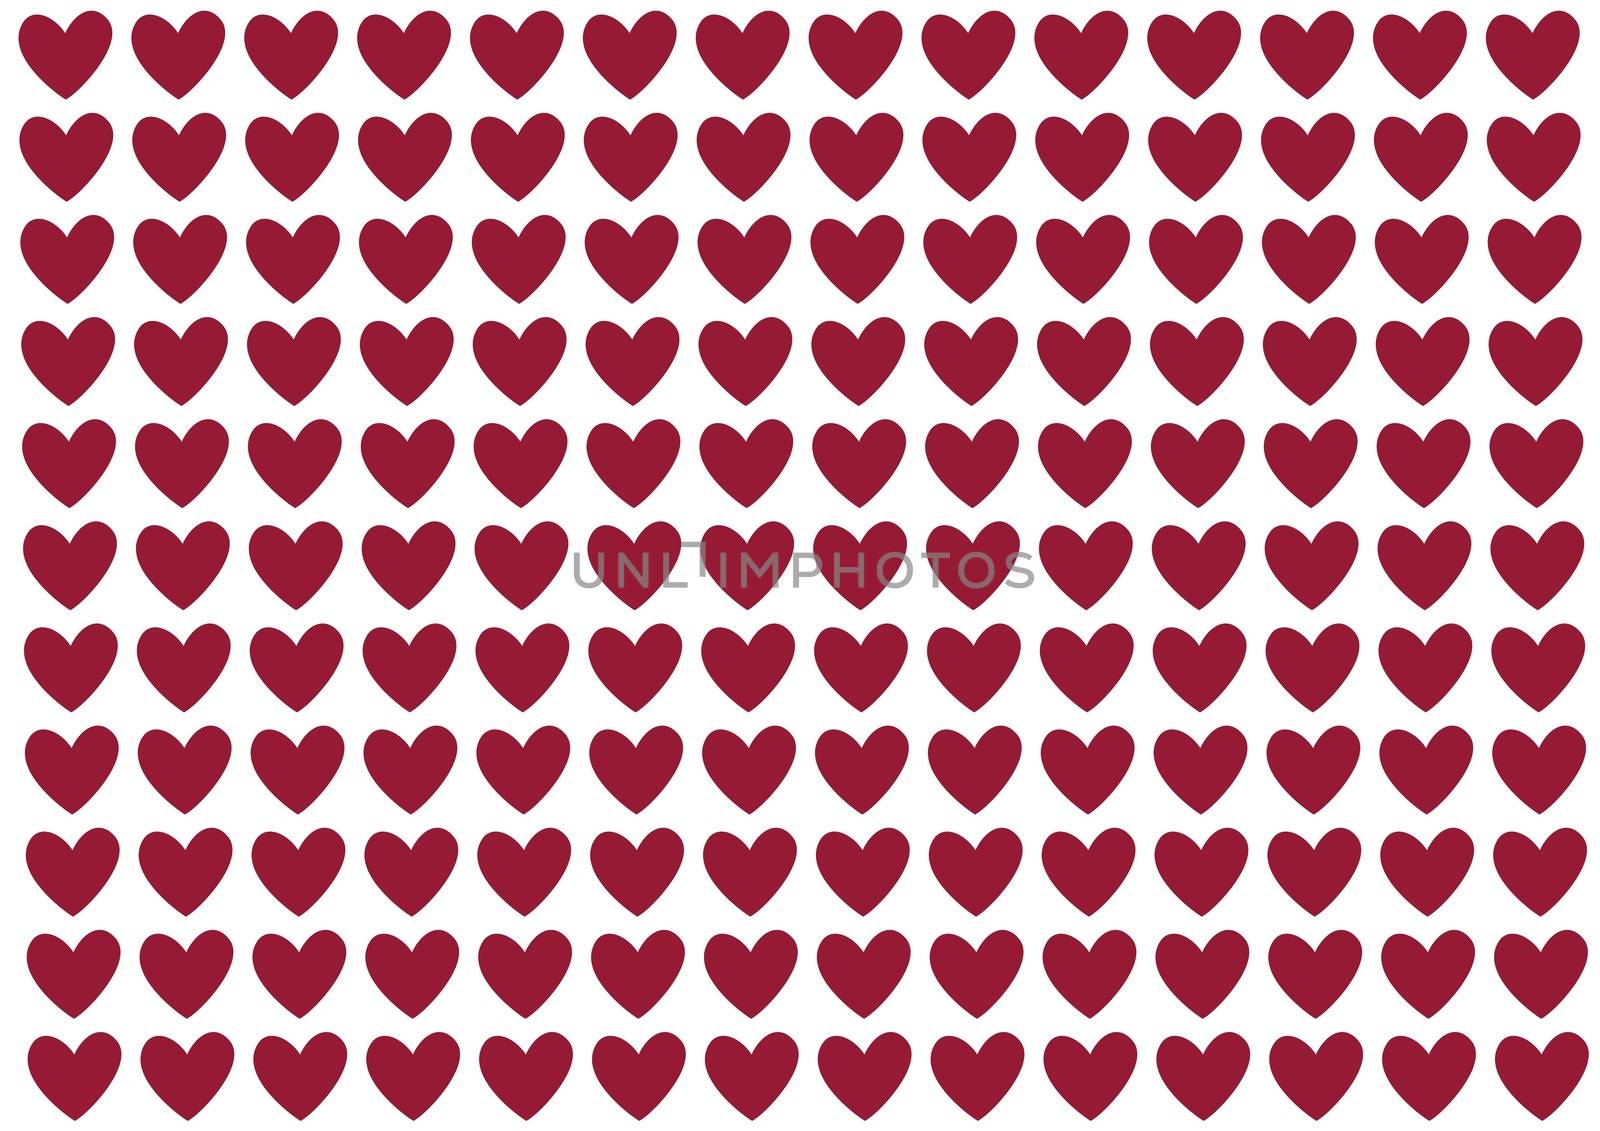 Digitally generated Valentines day pattern